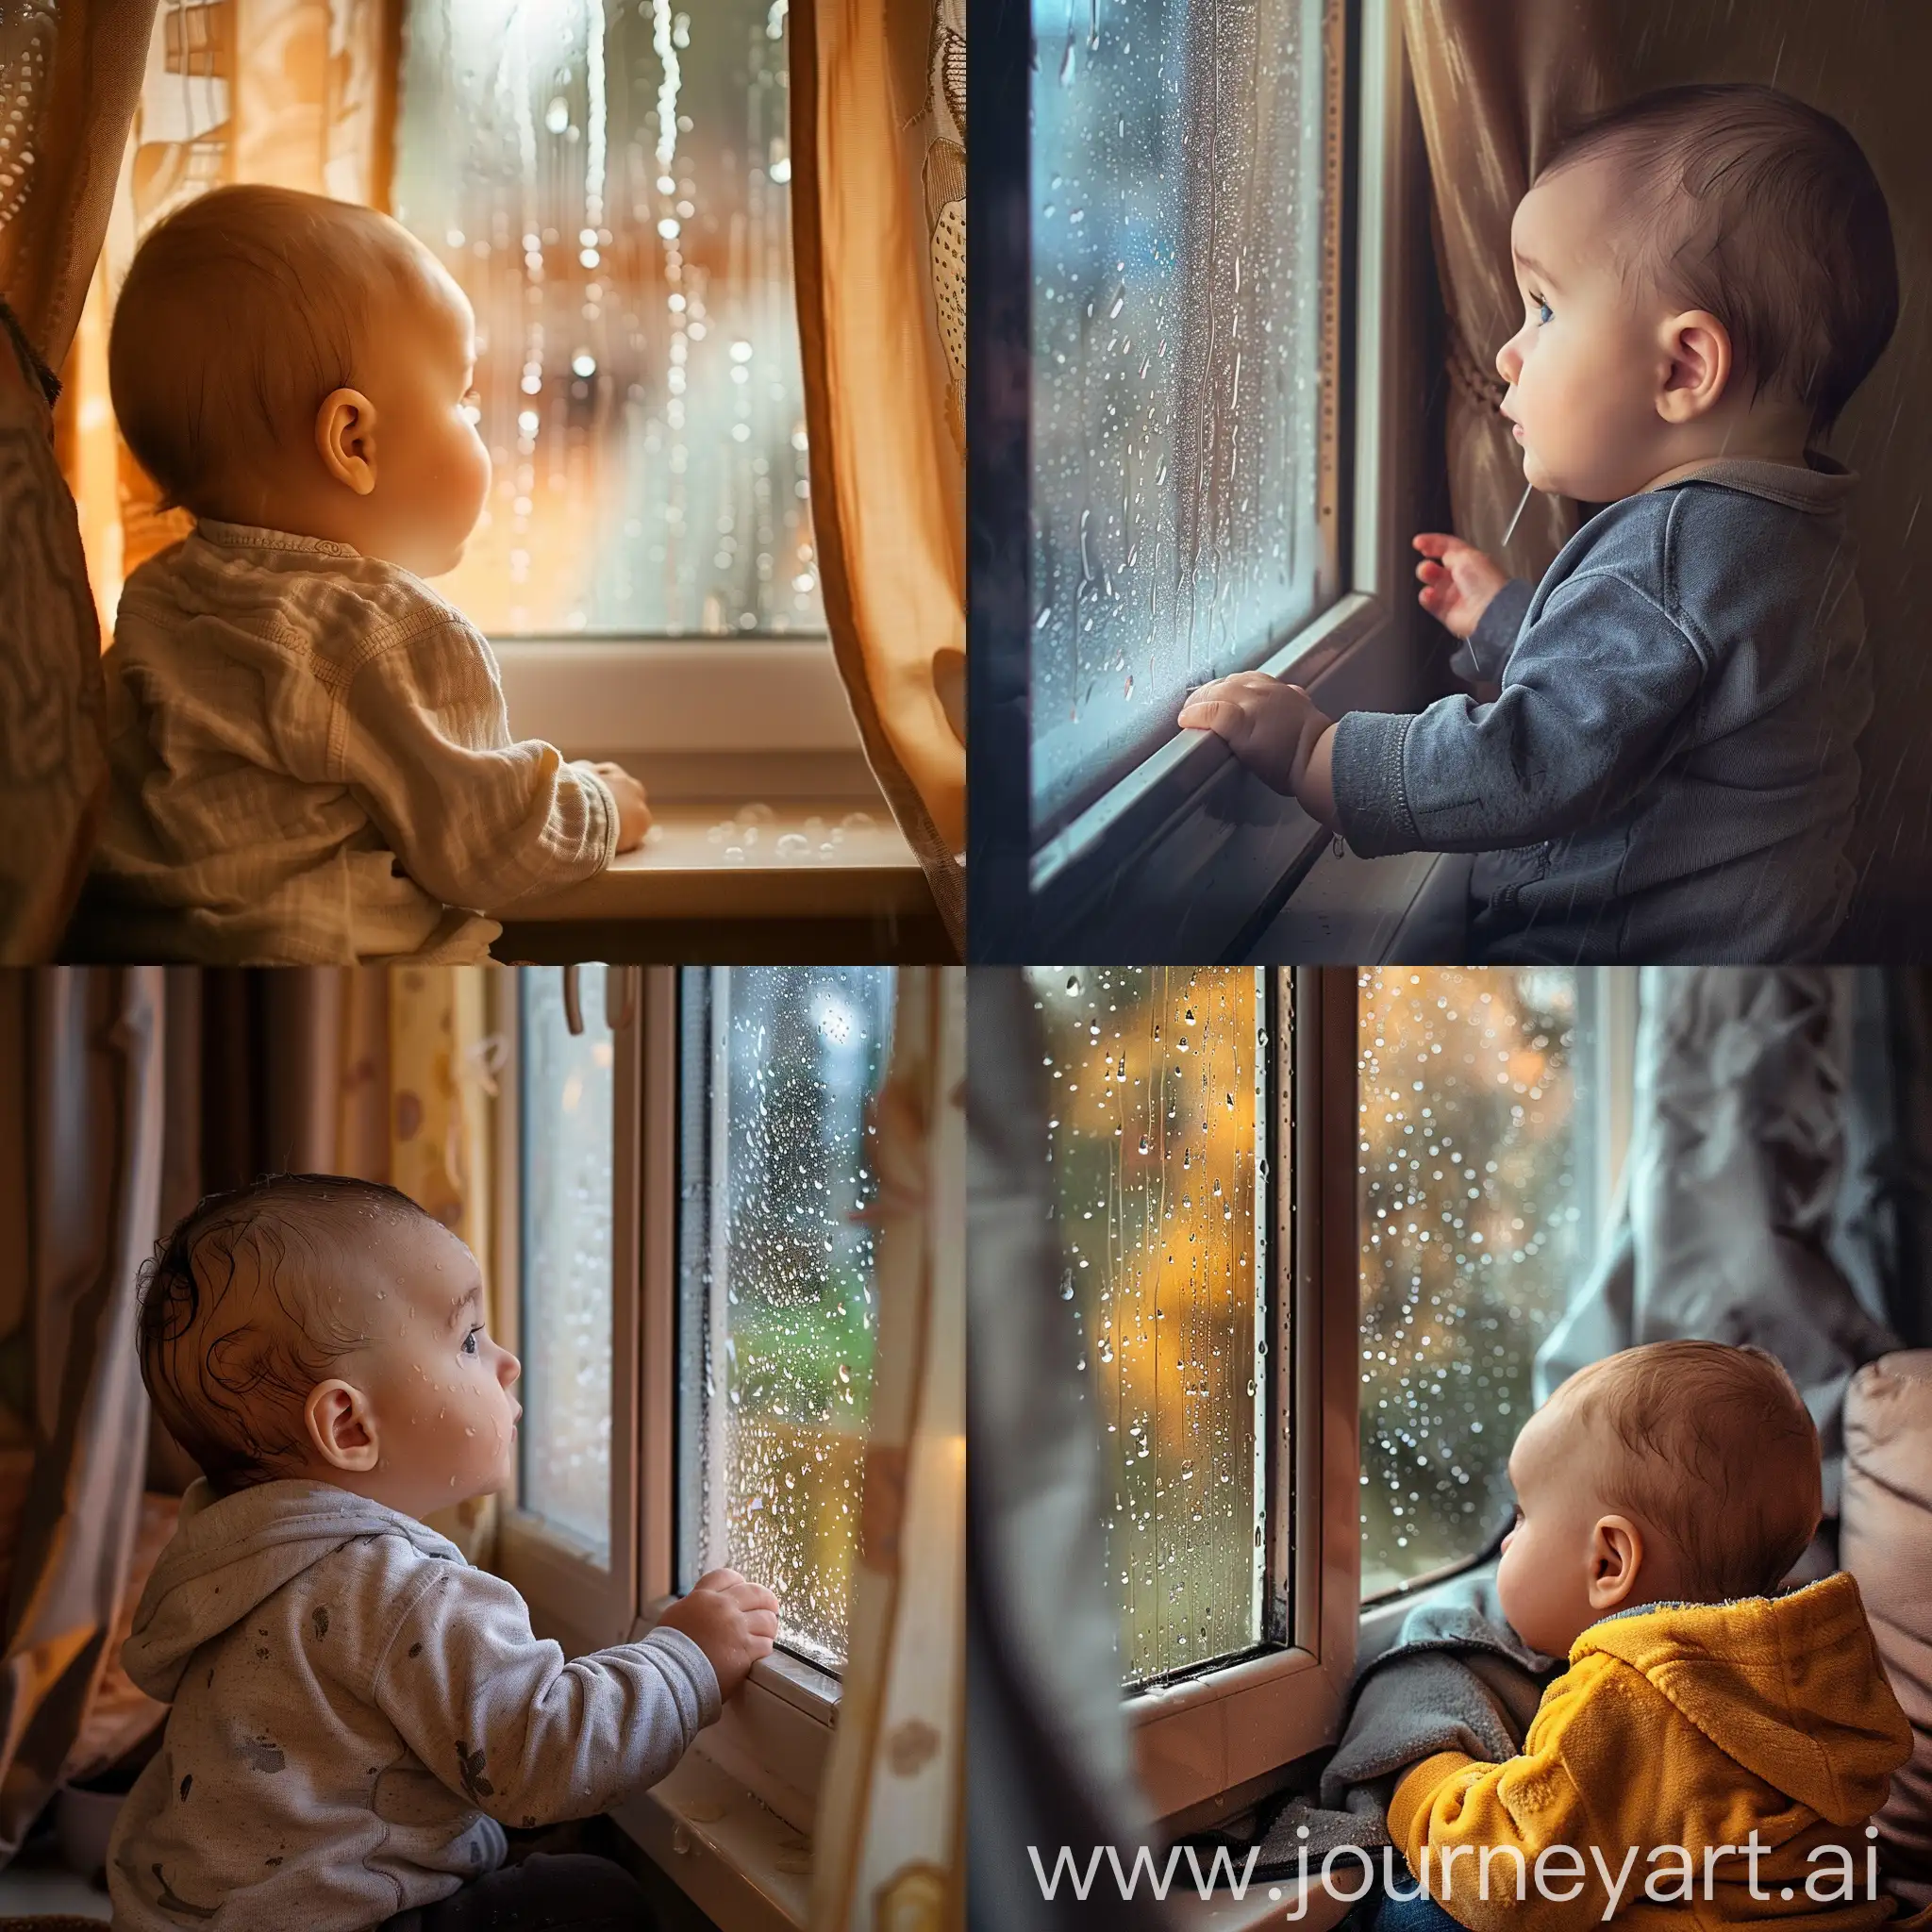 A baby boy is watching rain fraom his room window